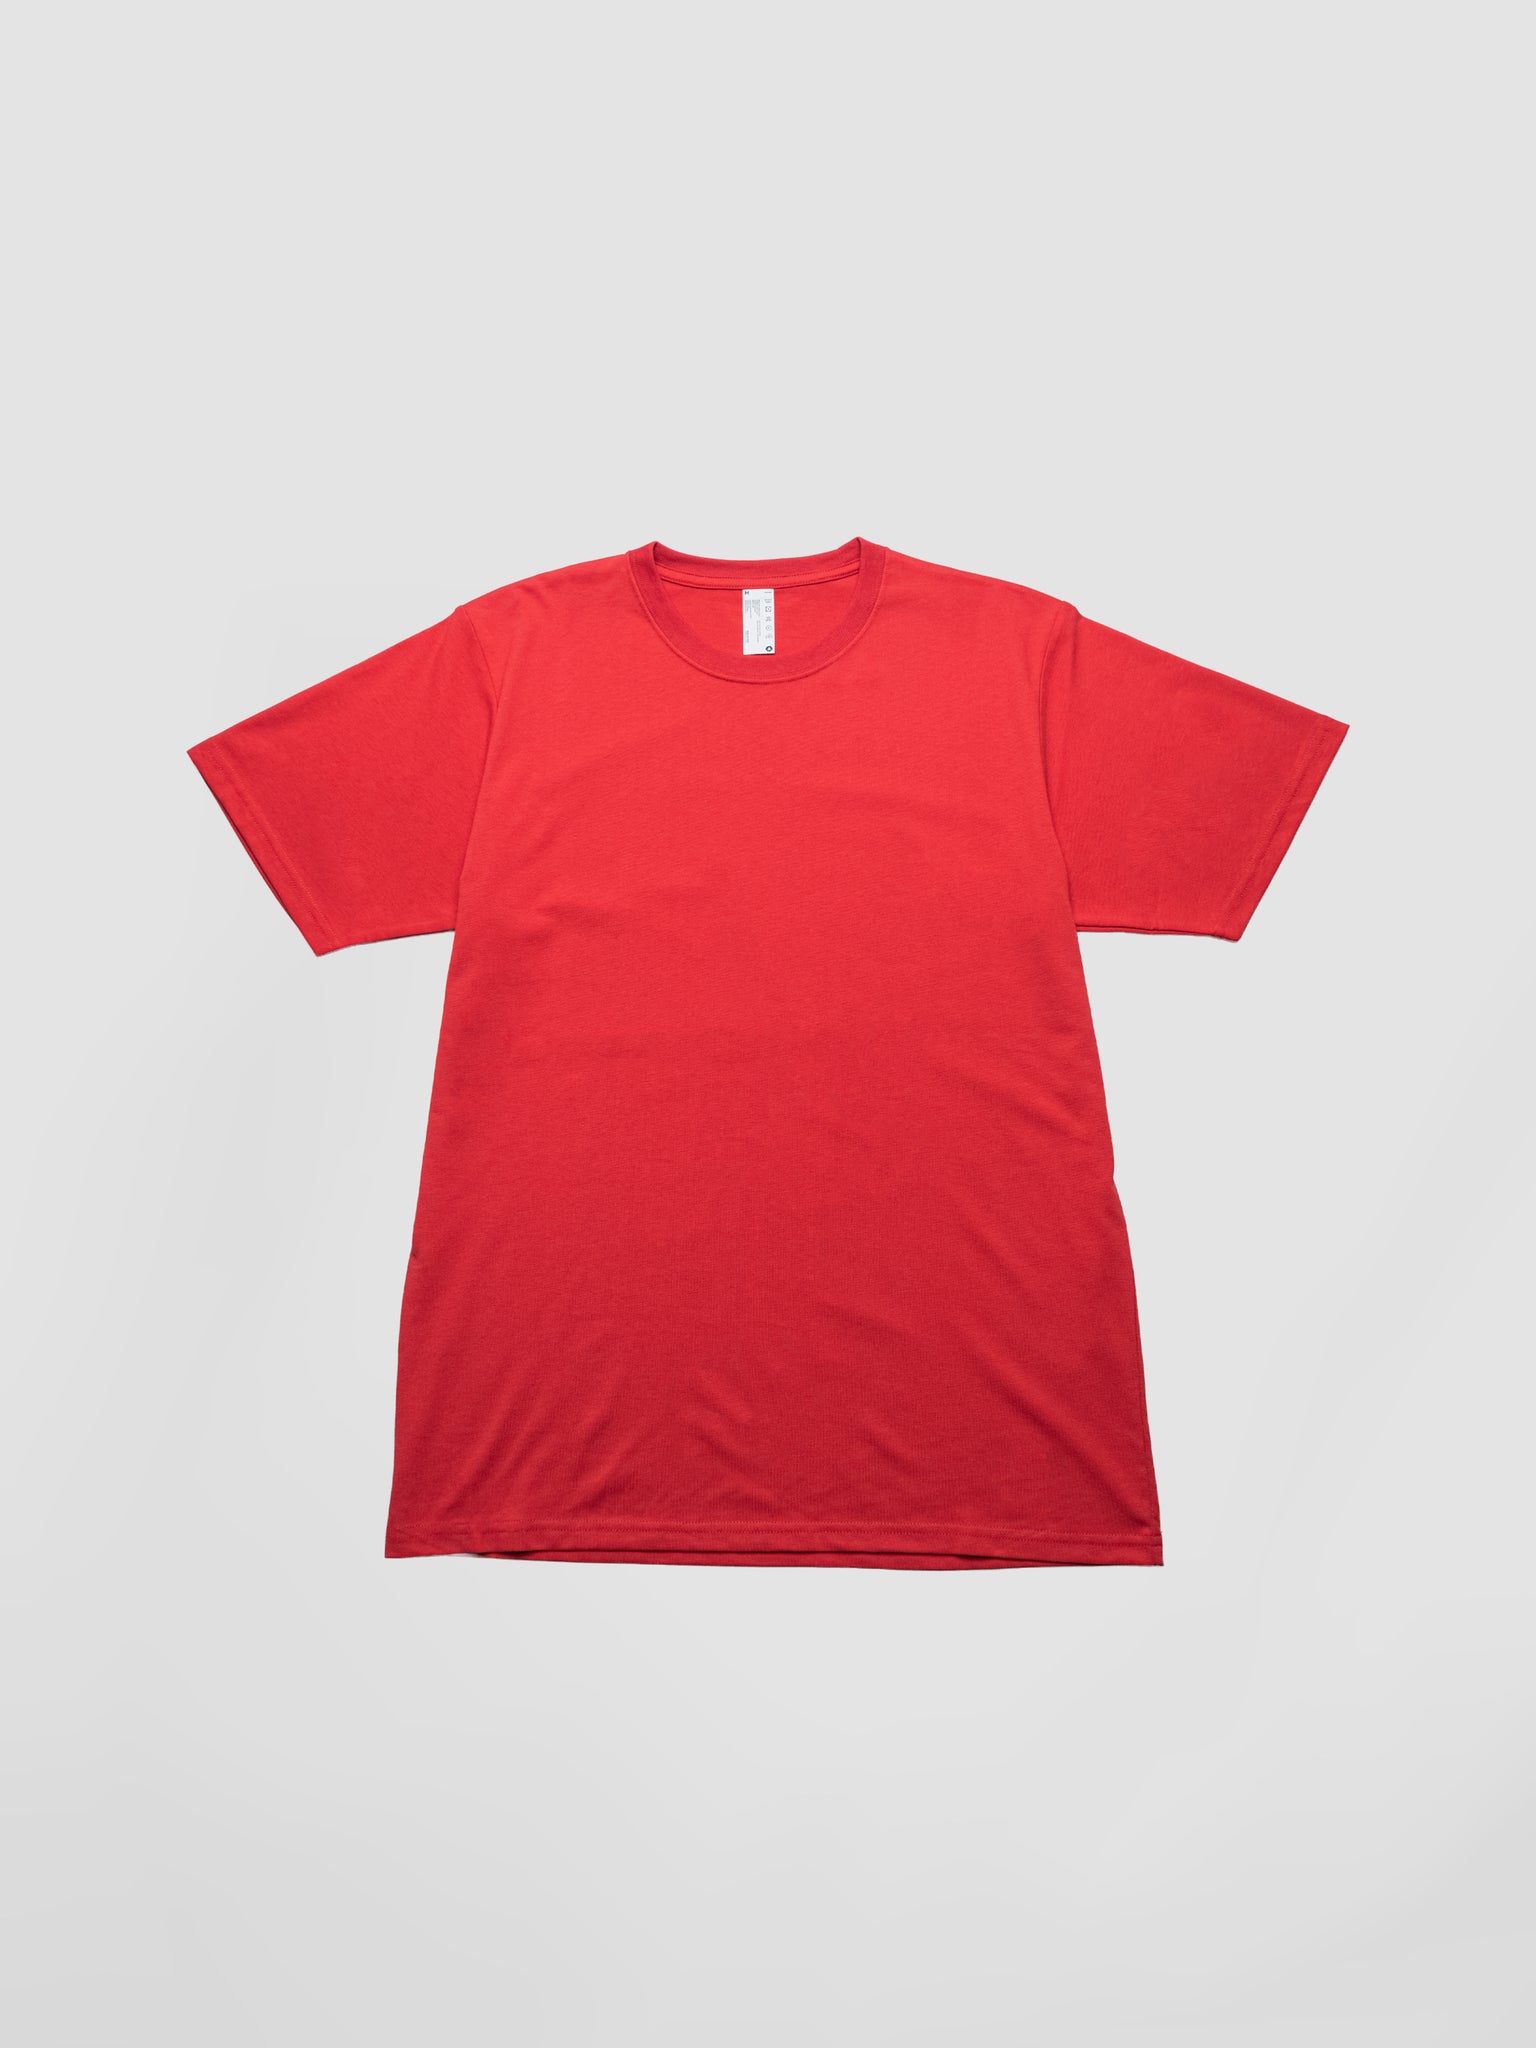 BLANK - Standard Fit T-Shirt Fire Whirl - v2